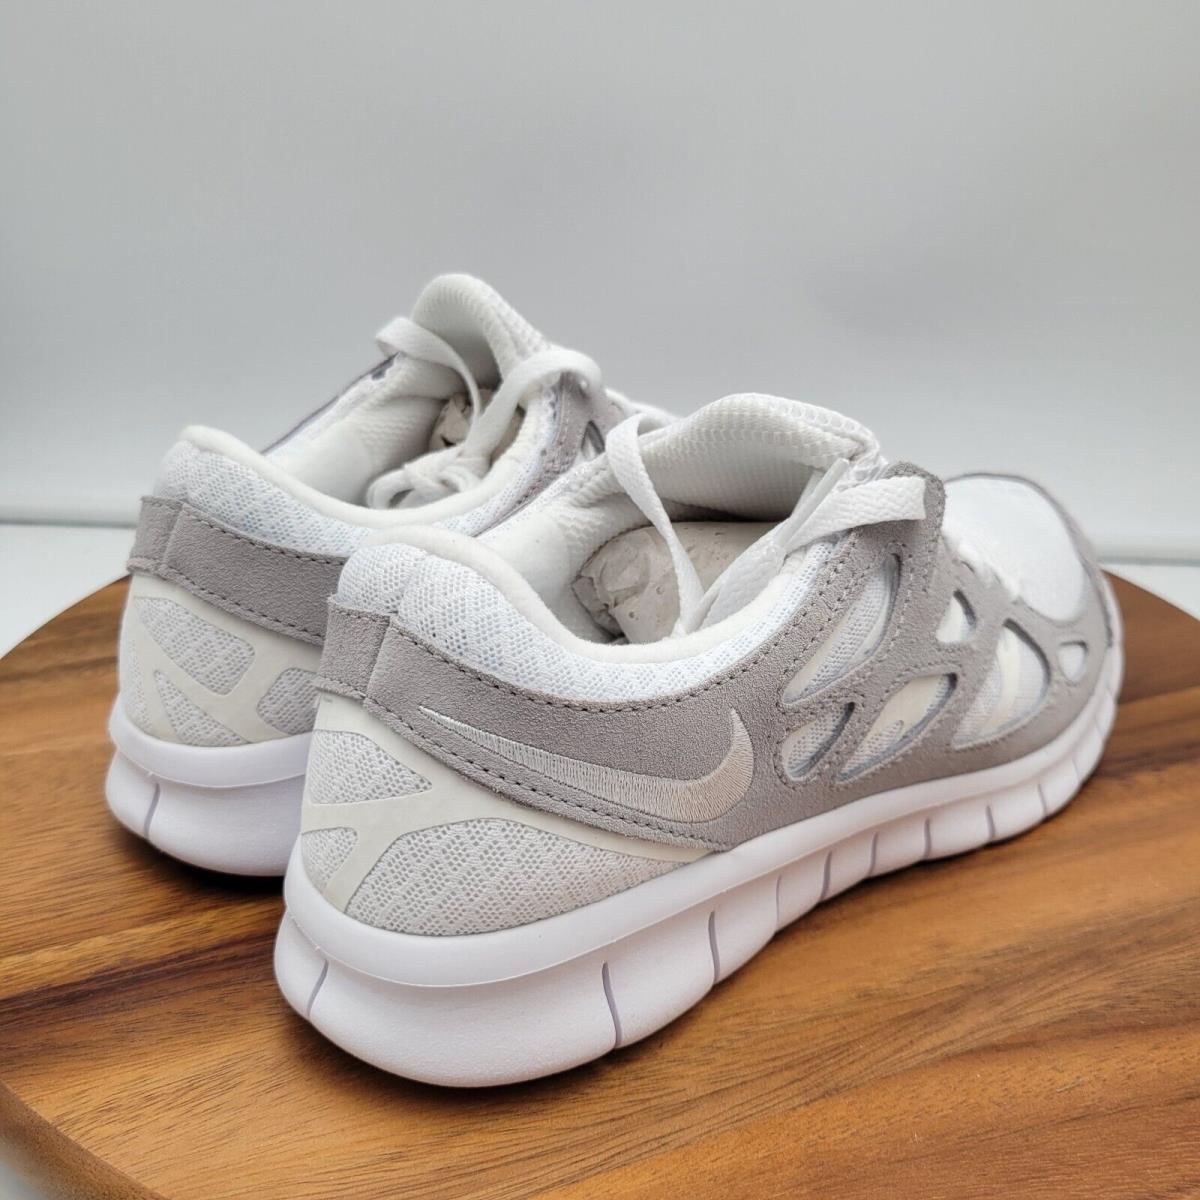 Nike shoes Free Run - White 7